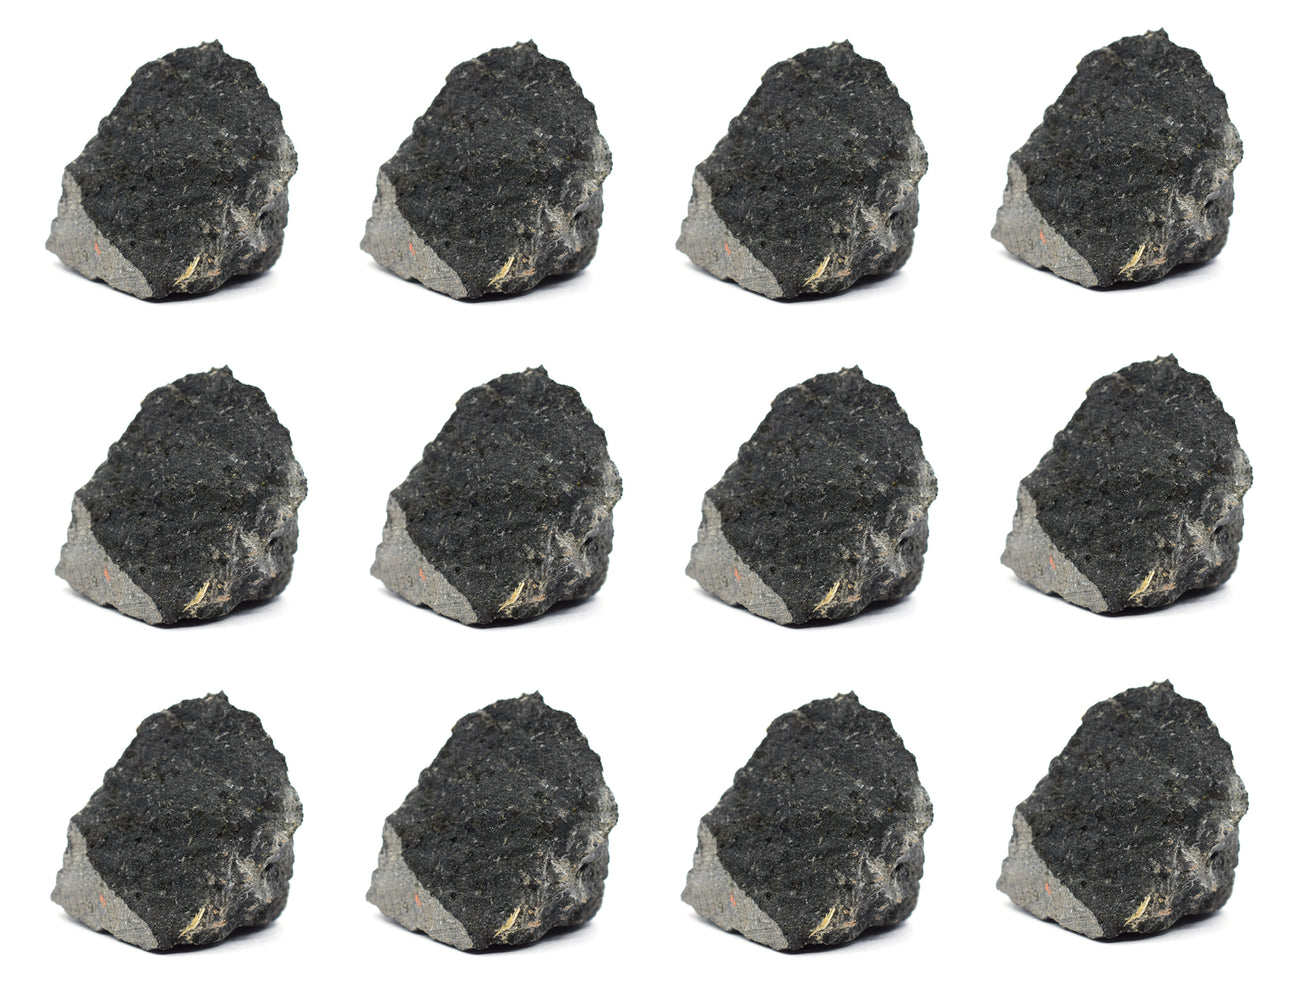 Raw Pumice Igneous Rock Specimen, 3 - Hand Sample Samples - Eisco Labs